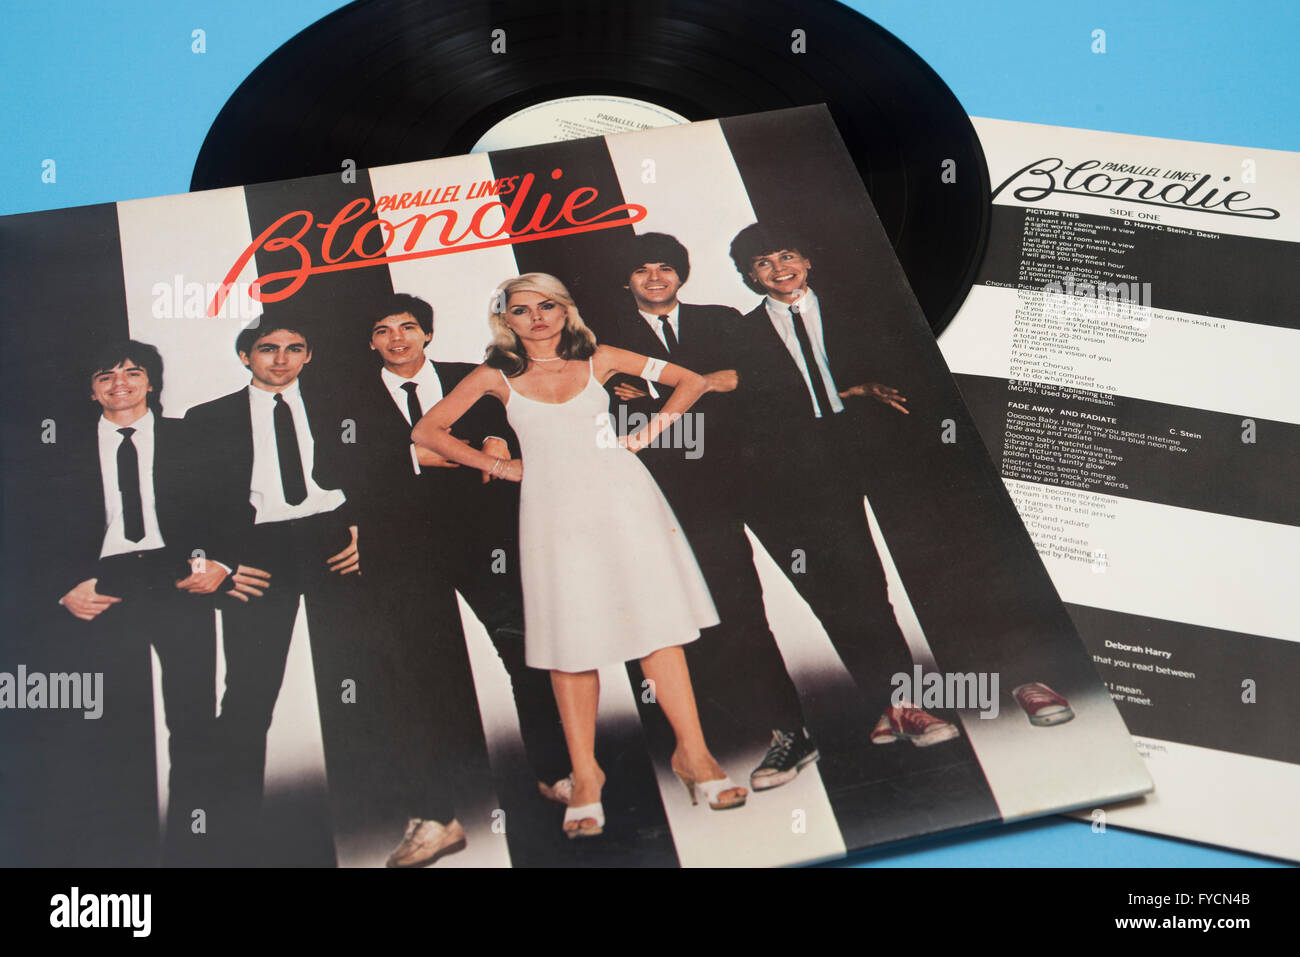 Parellel Lines album on vinyl by Blondie with Debbie Harry with original sleeve artwork Stock Photo